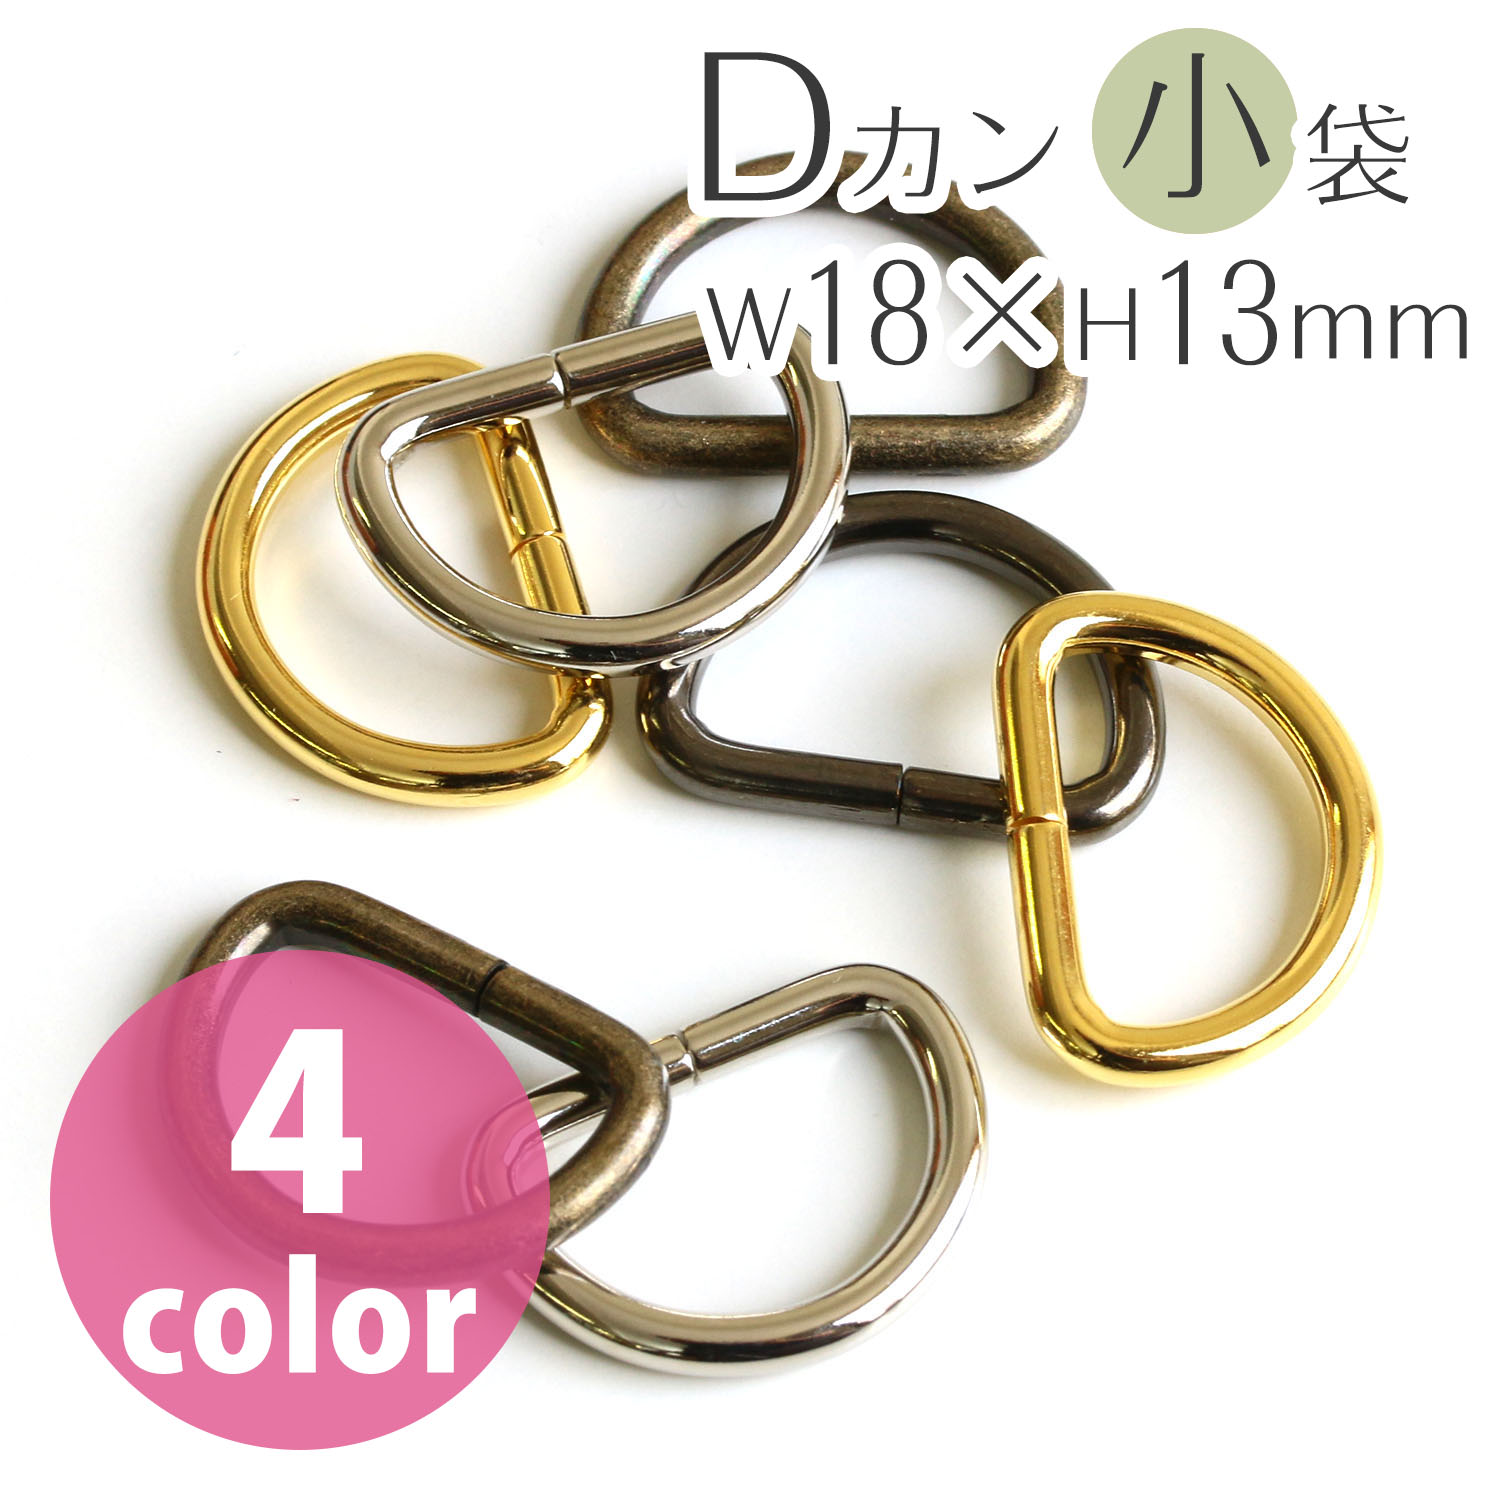 S22 D-Ring  18 x 13mm"", diameter 3mm  (bag)